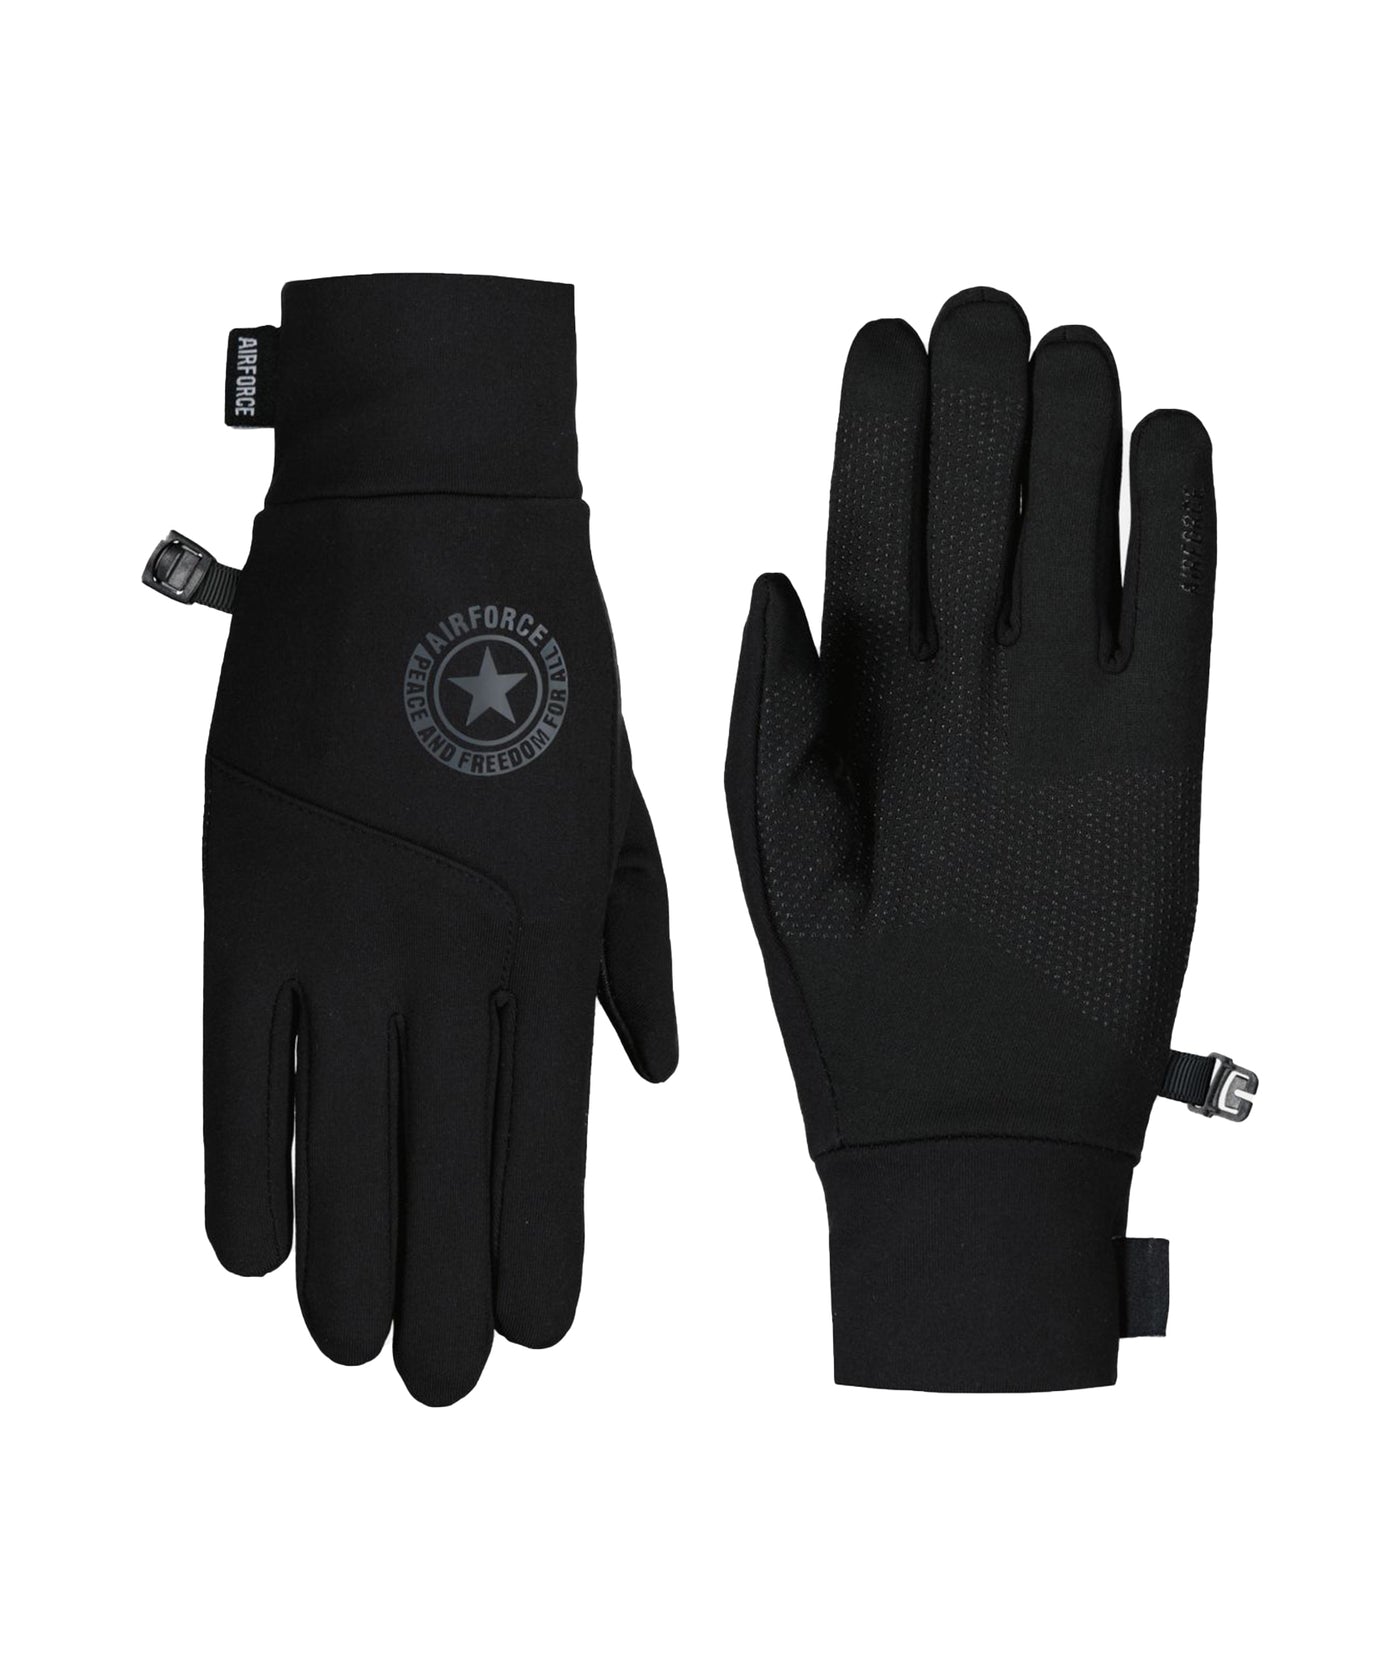 Airforce - Fru0845 - Technical Gloves - 901 True Black